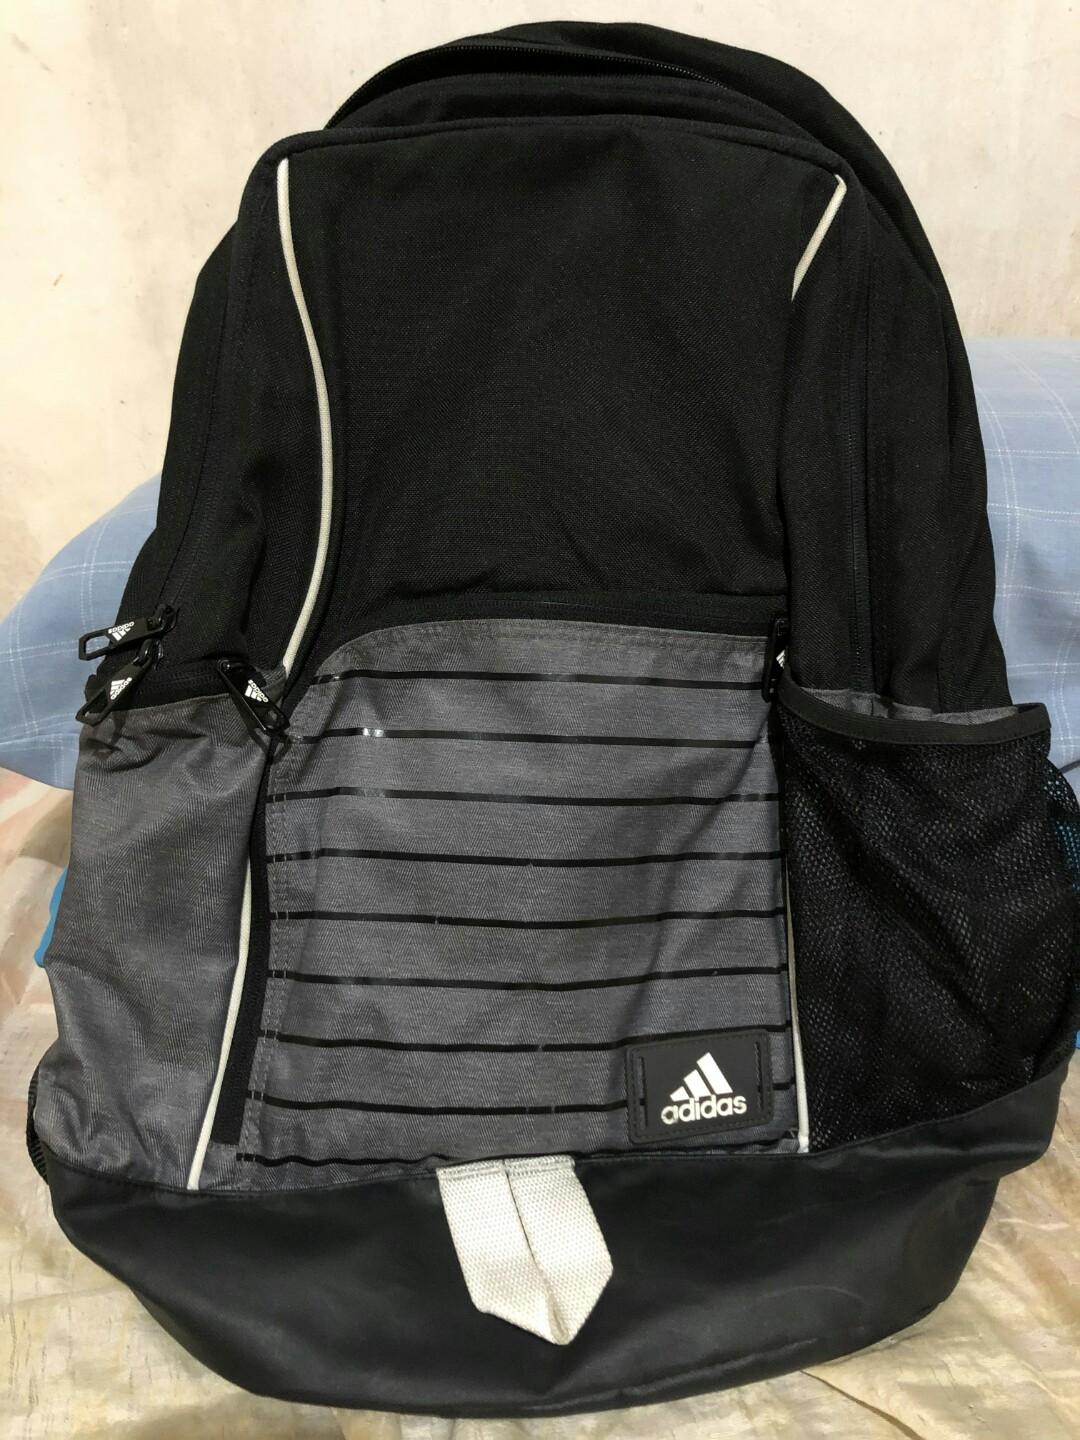 adidas backpack sale men's